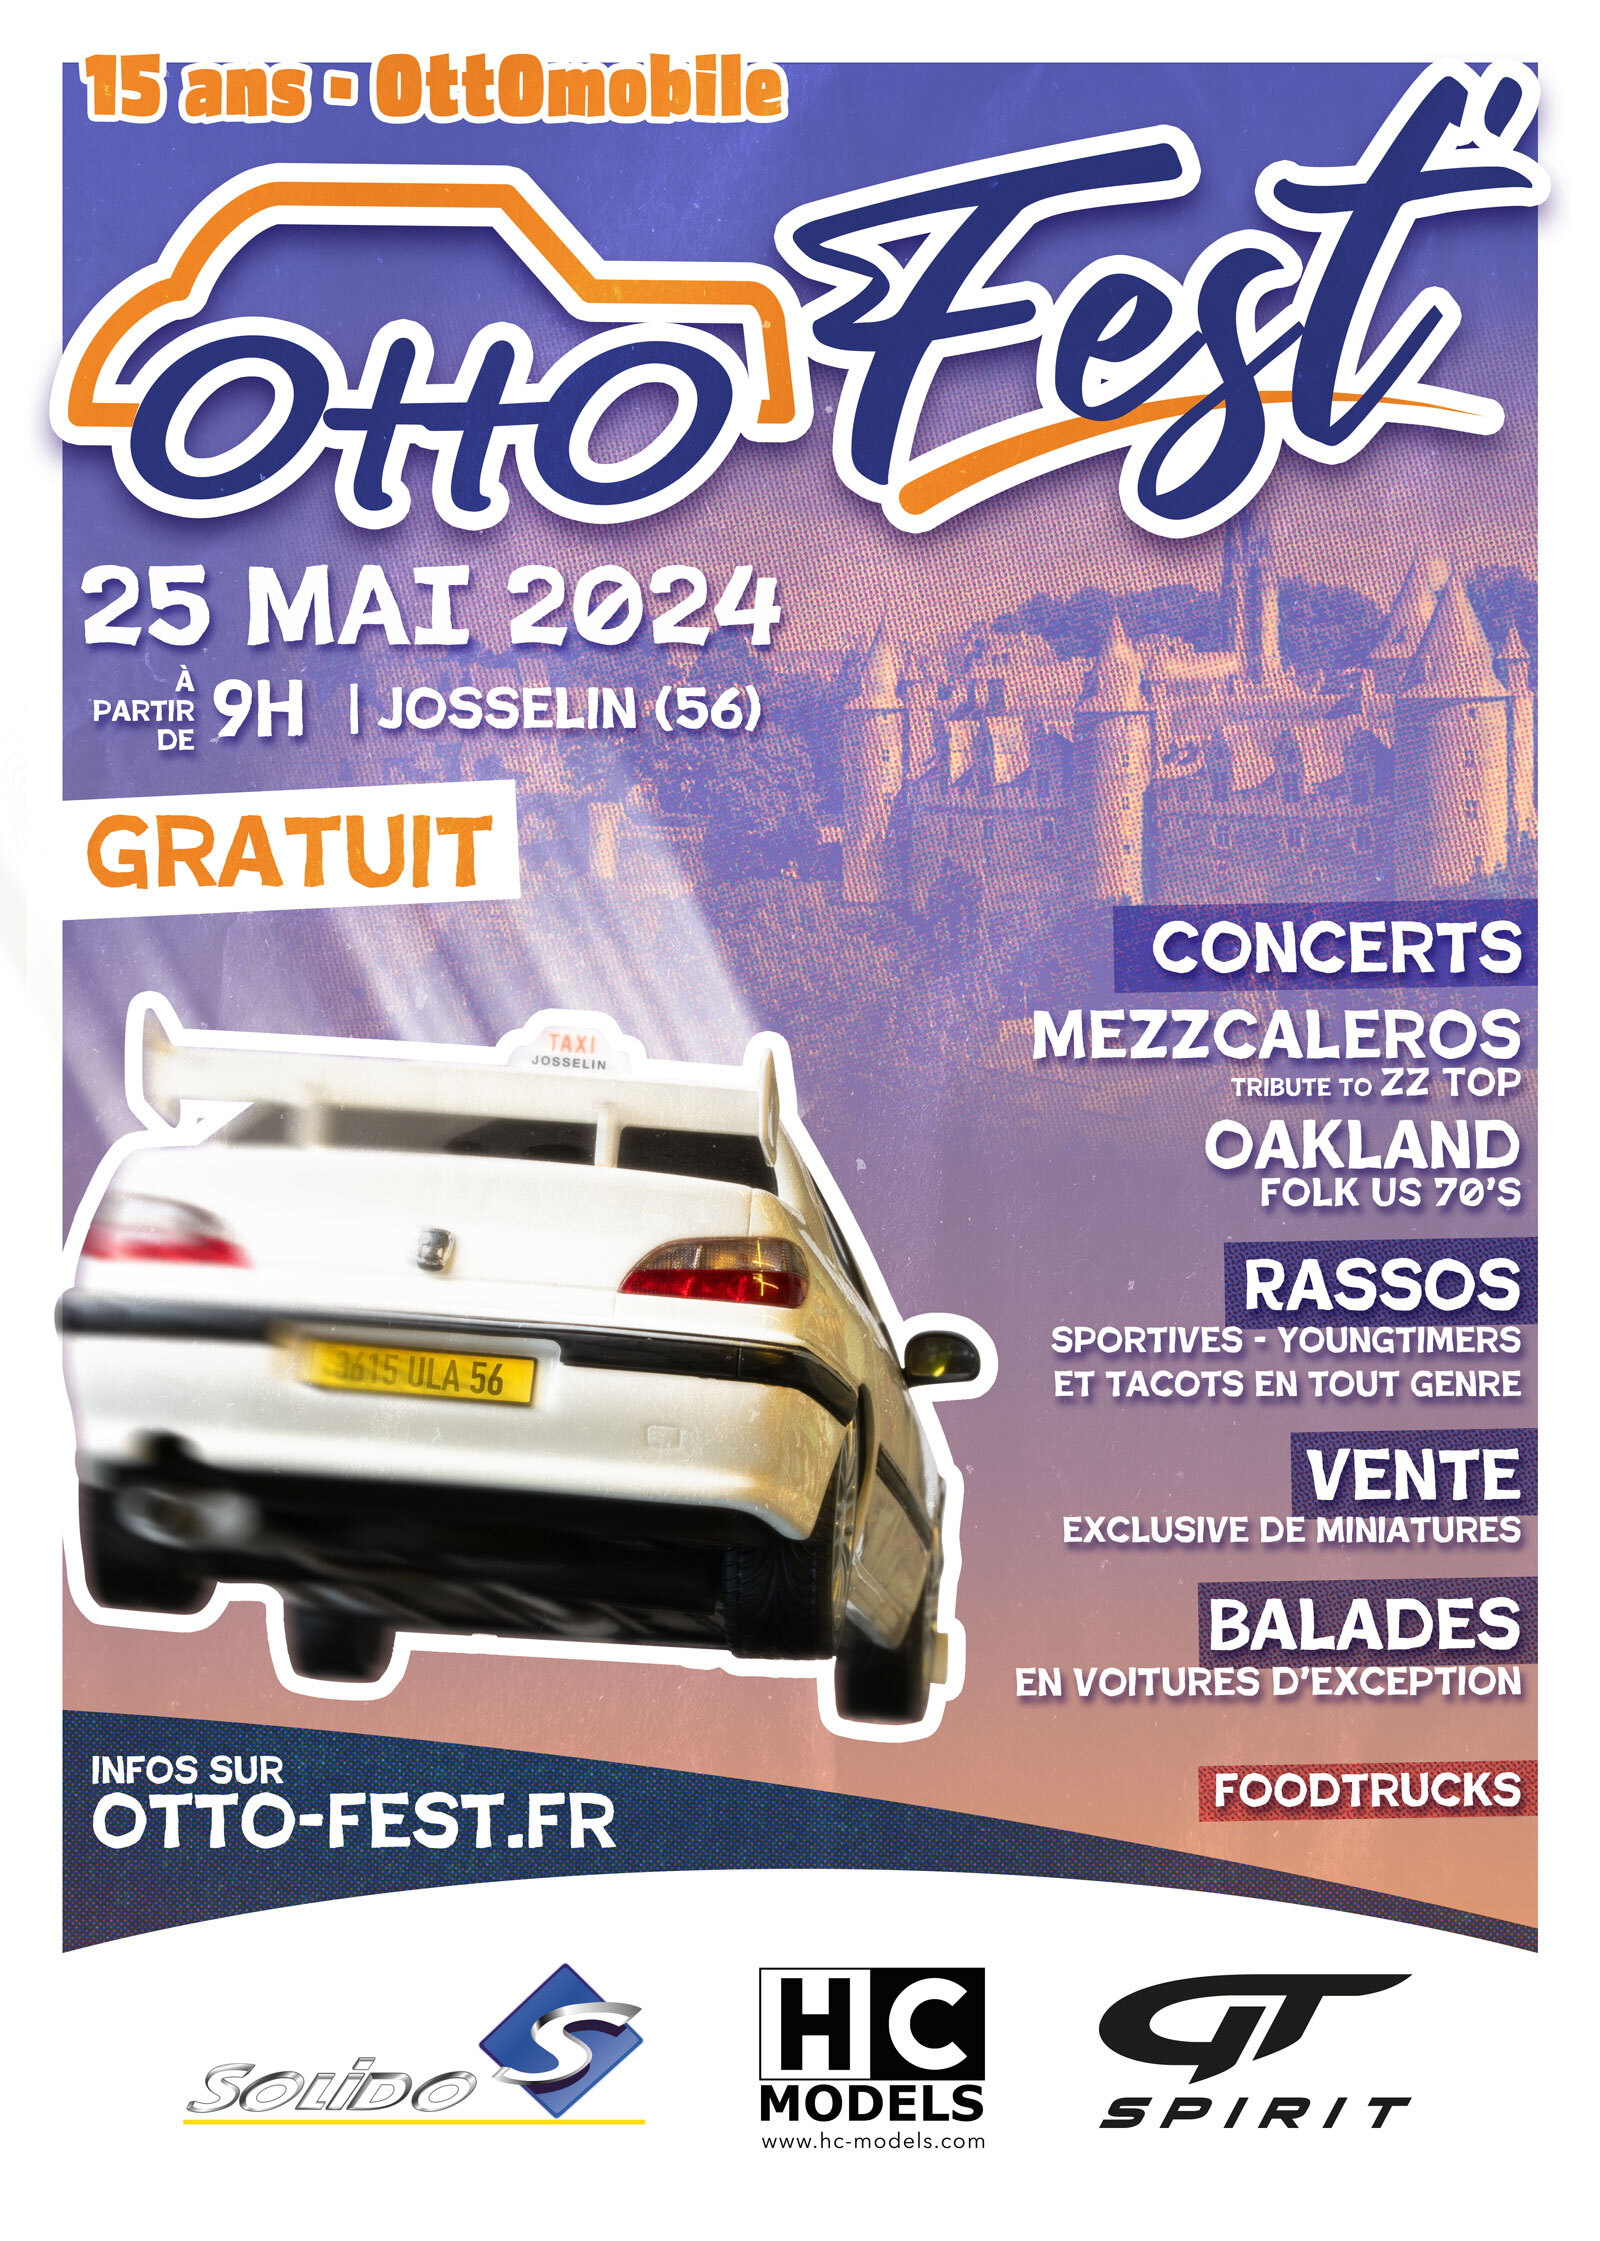 OttO Fest 2024 - 25 Mai 2024 à Josselin (56) Rtpj